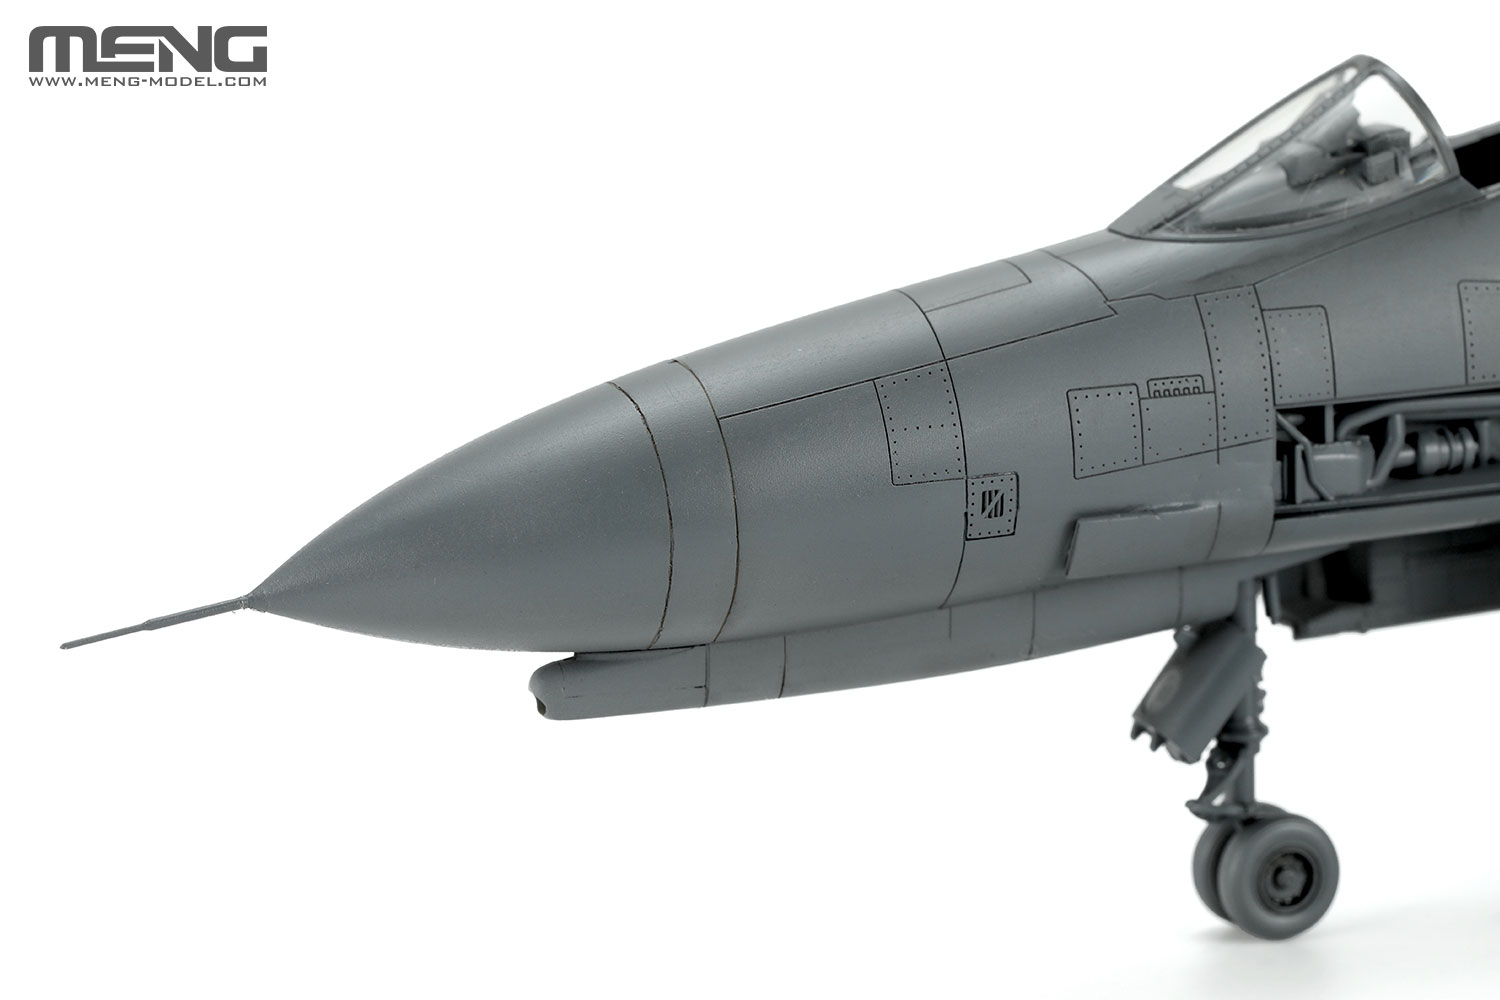 1/48　F-4E ファントムII 戦闘機 - ウインドウを閉じる